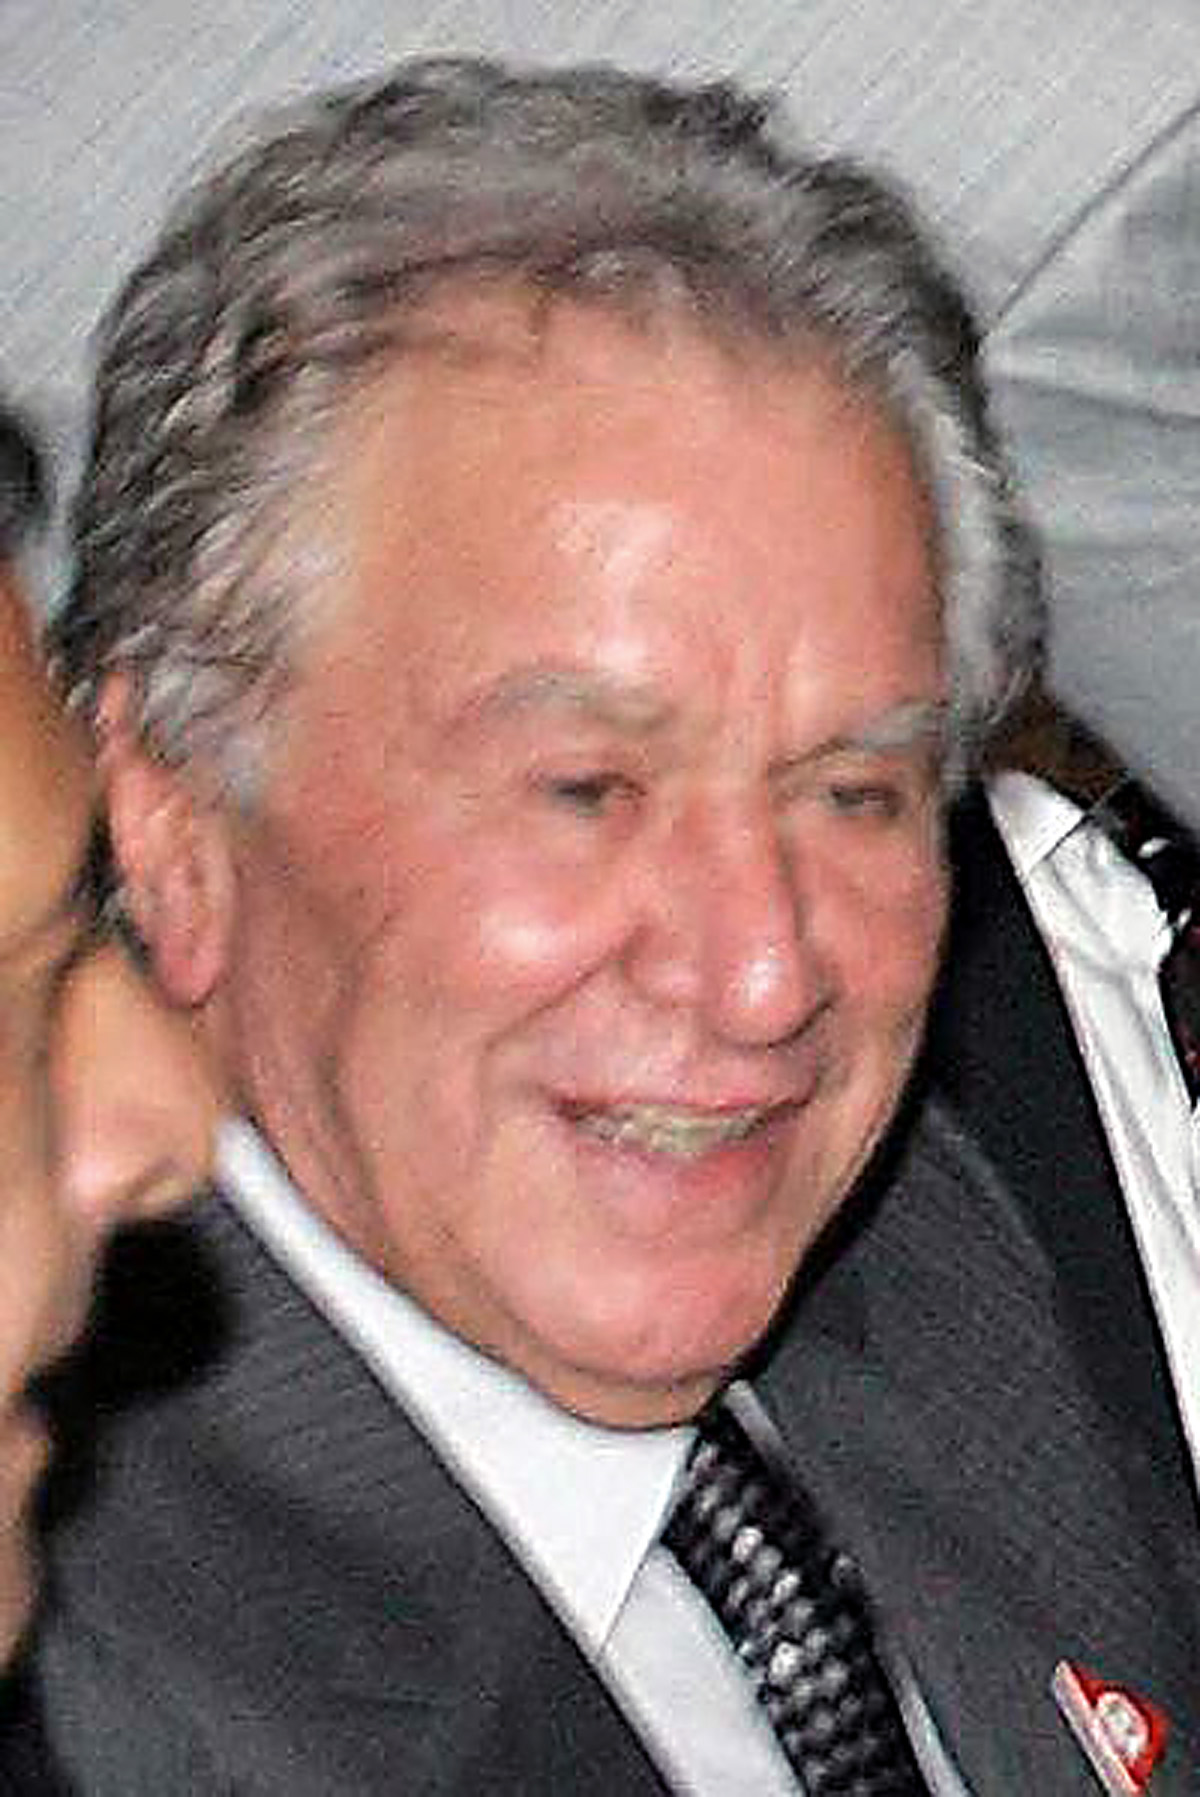 Juvenal Juvncio, presidente do So Paulo <a style='float:right;color:#ccc' href='https://www3.al.sp.gov.br/repositorio/noticia/02-2010/JuvenalJuvencio.jpg' target=_blank><i class='bi bi-zoom-in'></i> Clique para ver a imagem </a>